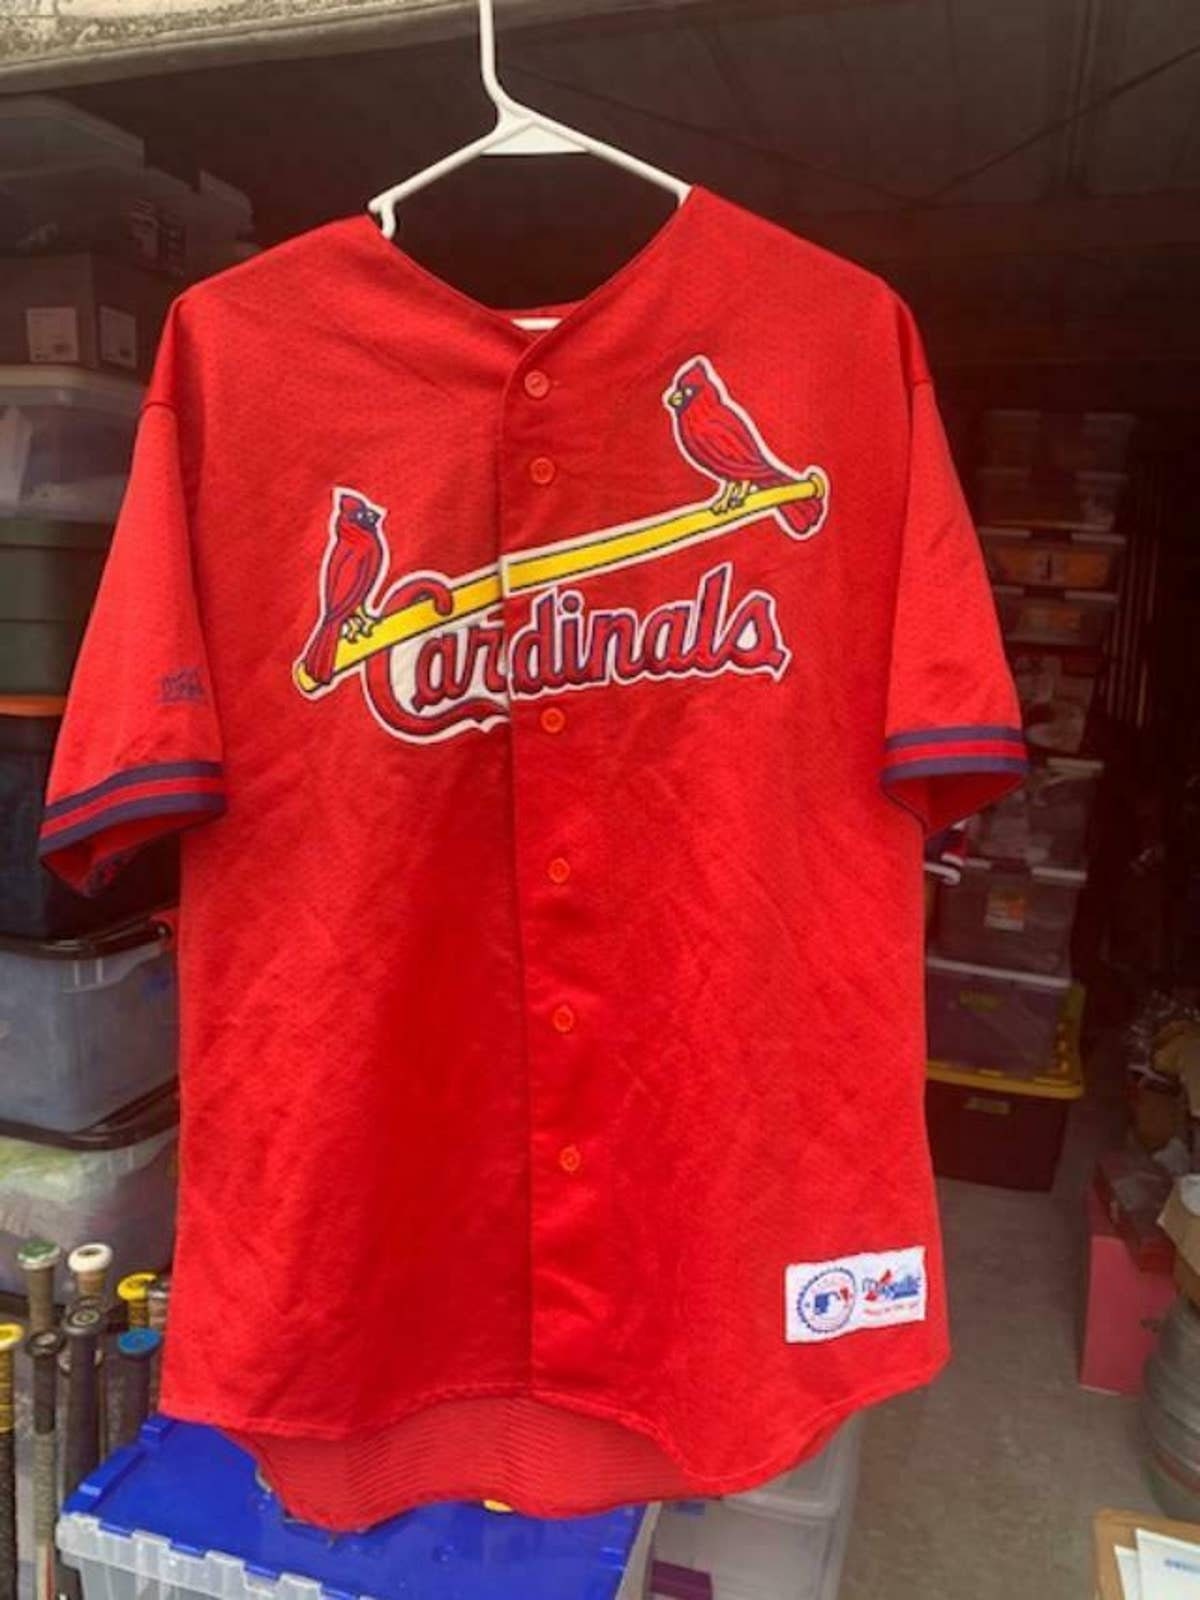 stl cardinals red jersey